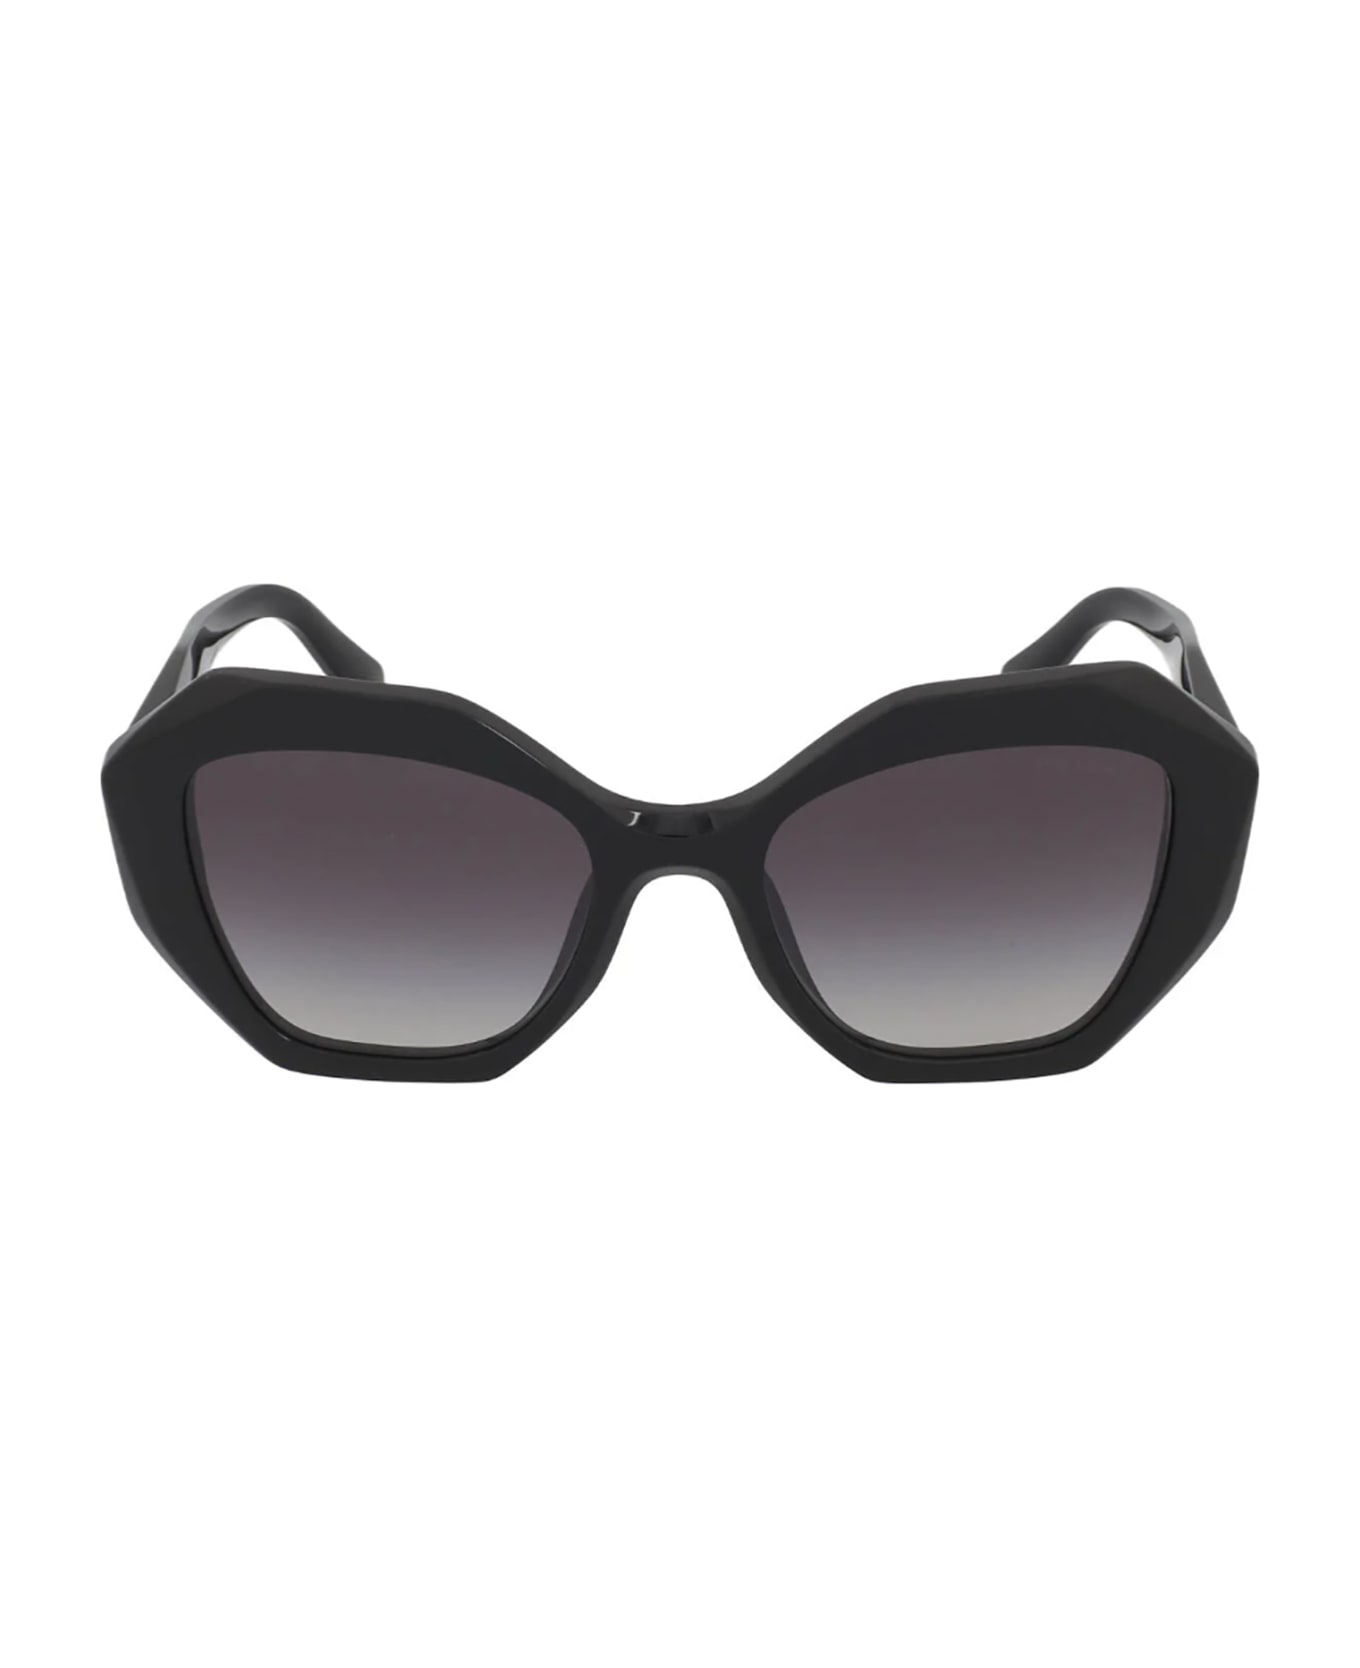 Prada Eyewear 16WS SOLE Sunglasses サングラス